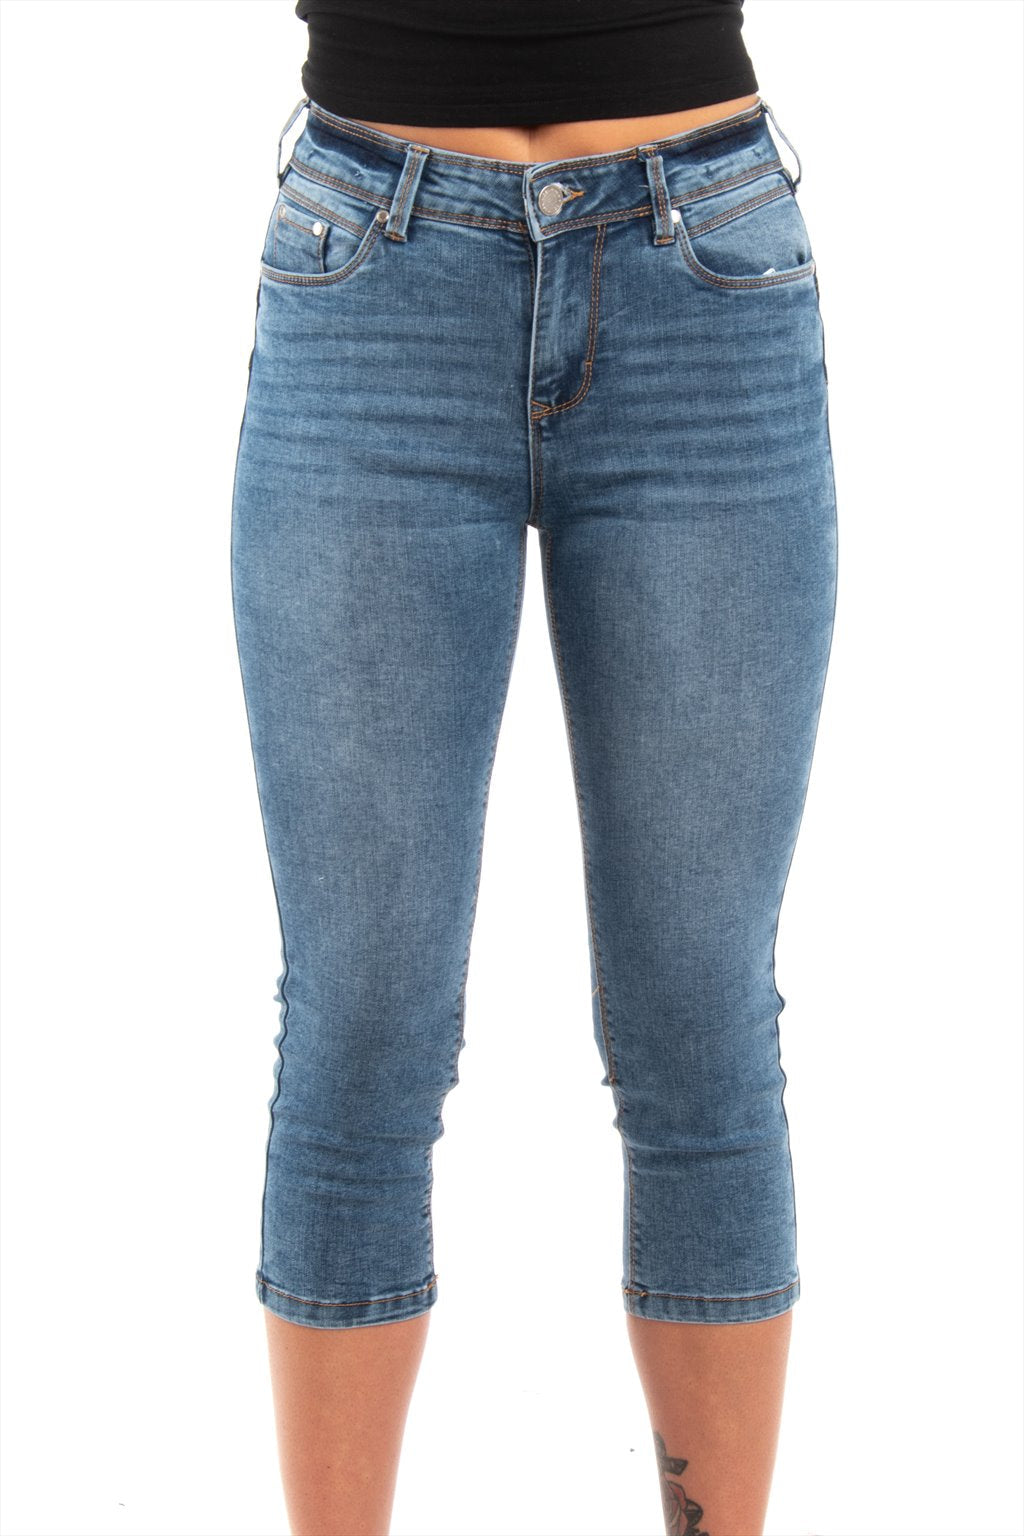 Blue Jean Womens Capri Shorts – PoleStar Garments